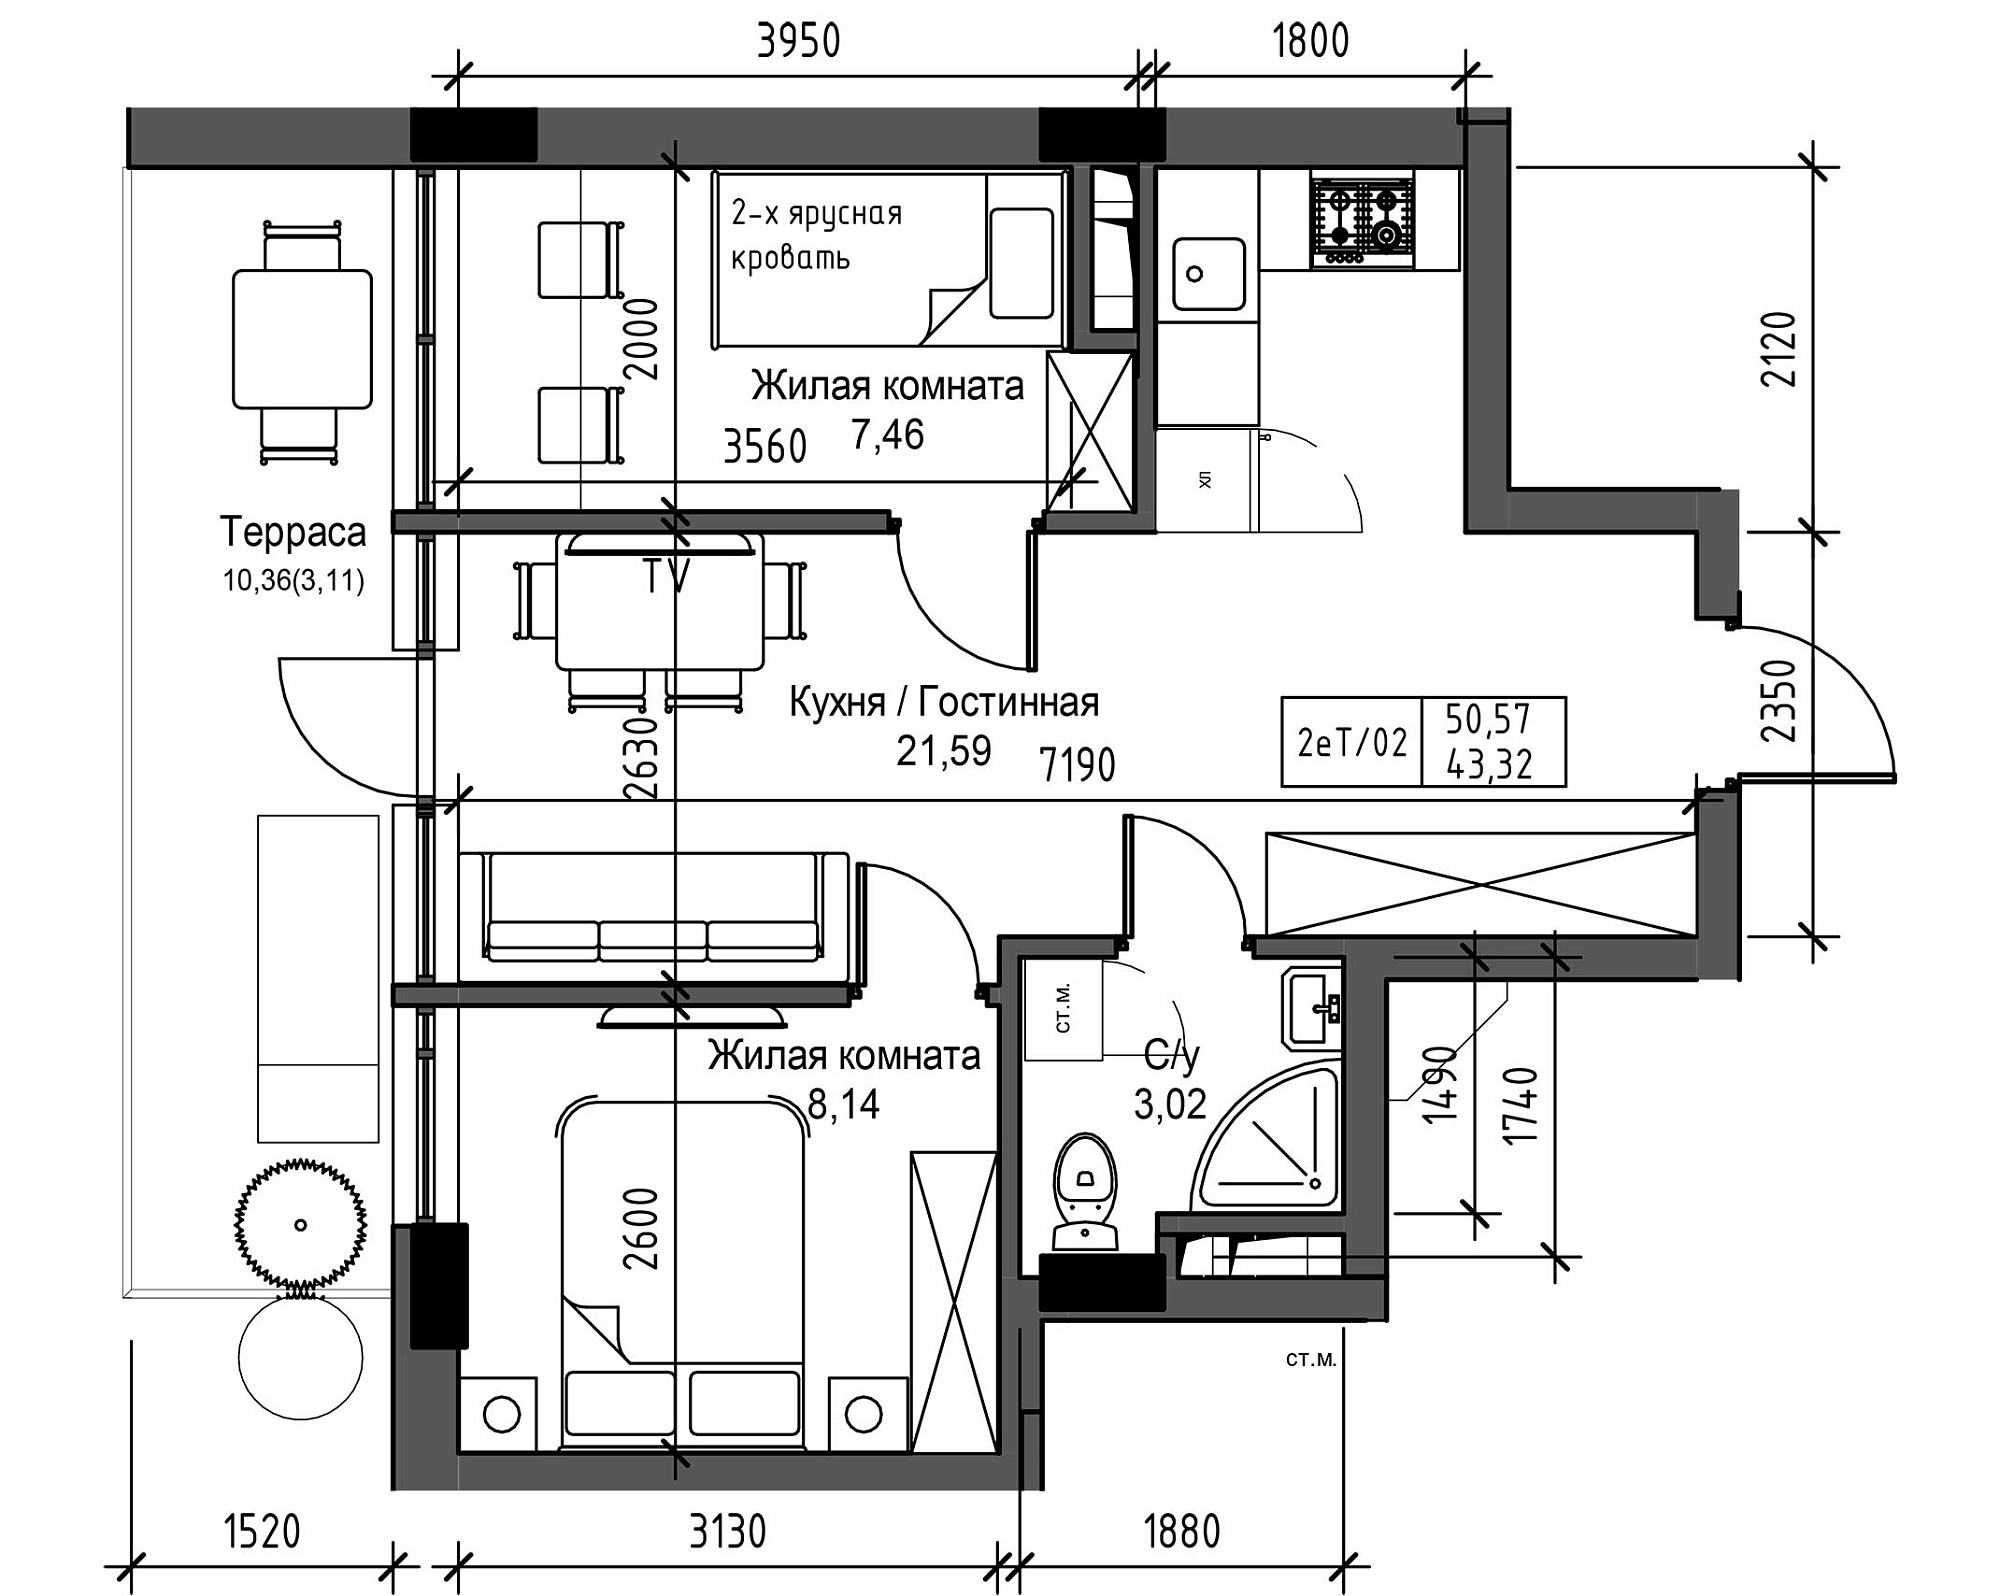 Планування 2-к квартира площею 43.32м2, UM-003-07/0074.